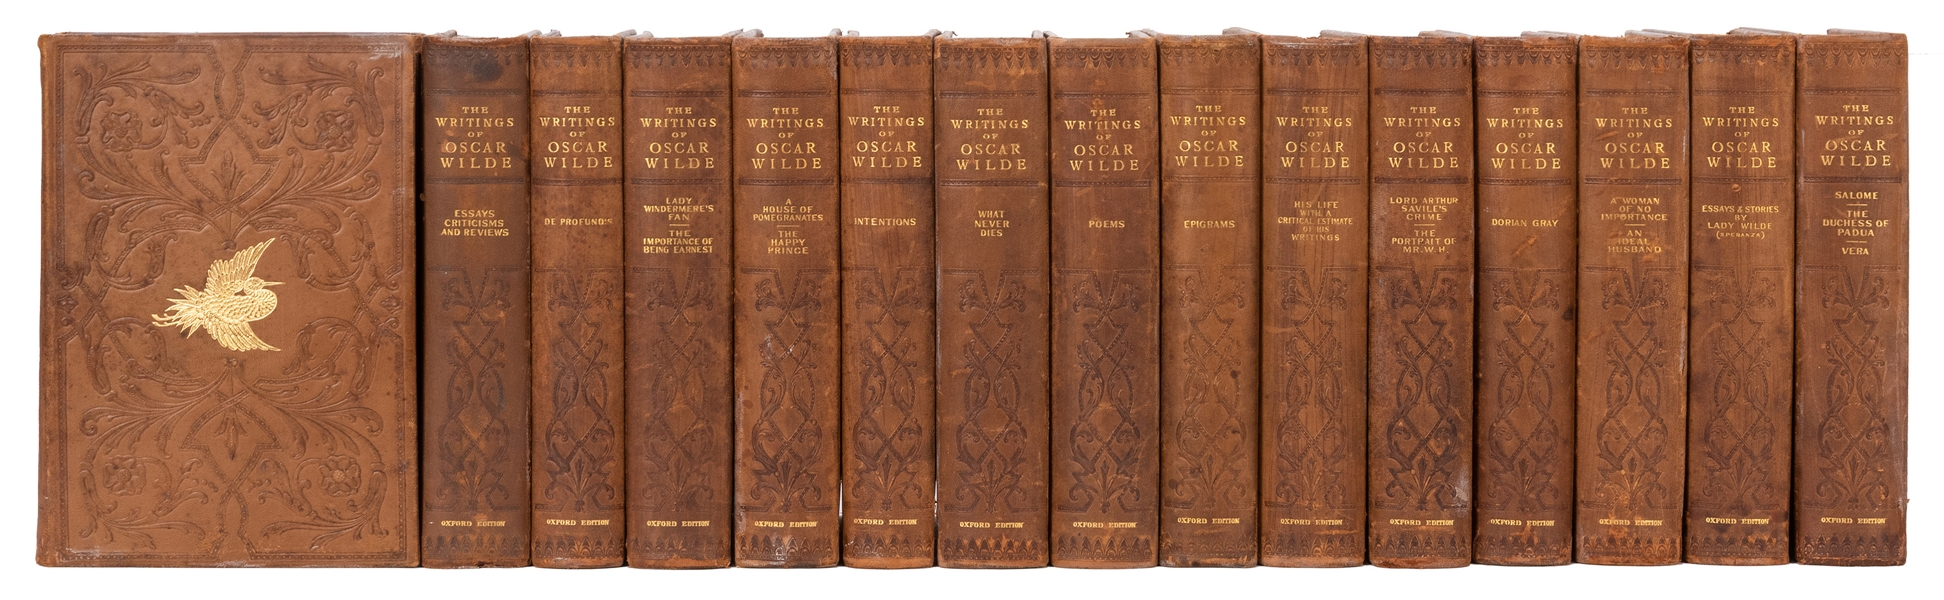 The Writings of Oscar Wilde, Oxford Uniform Edition.